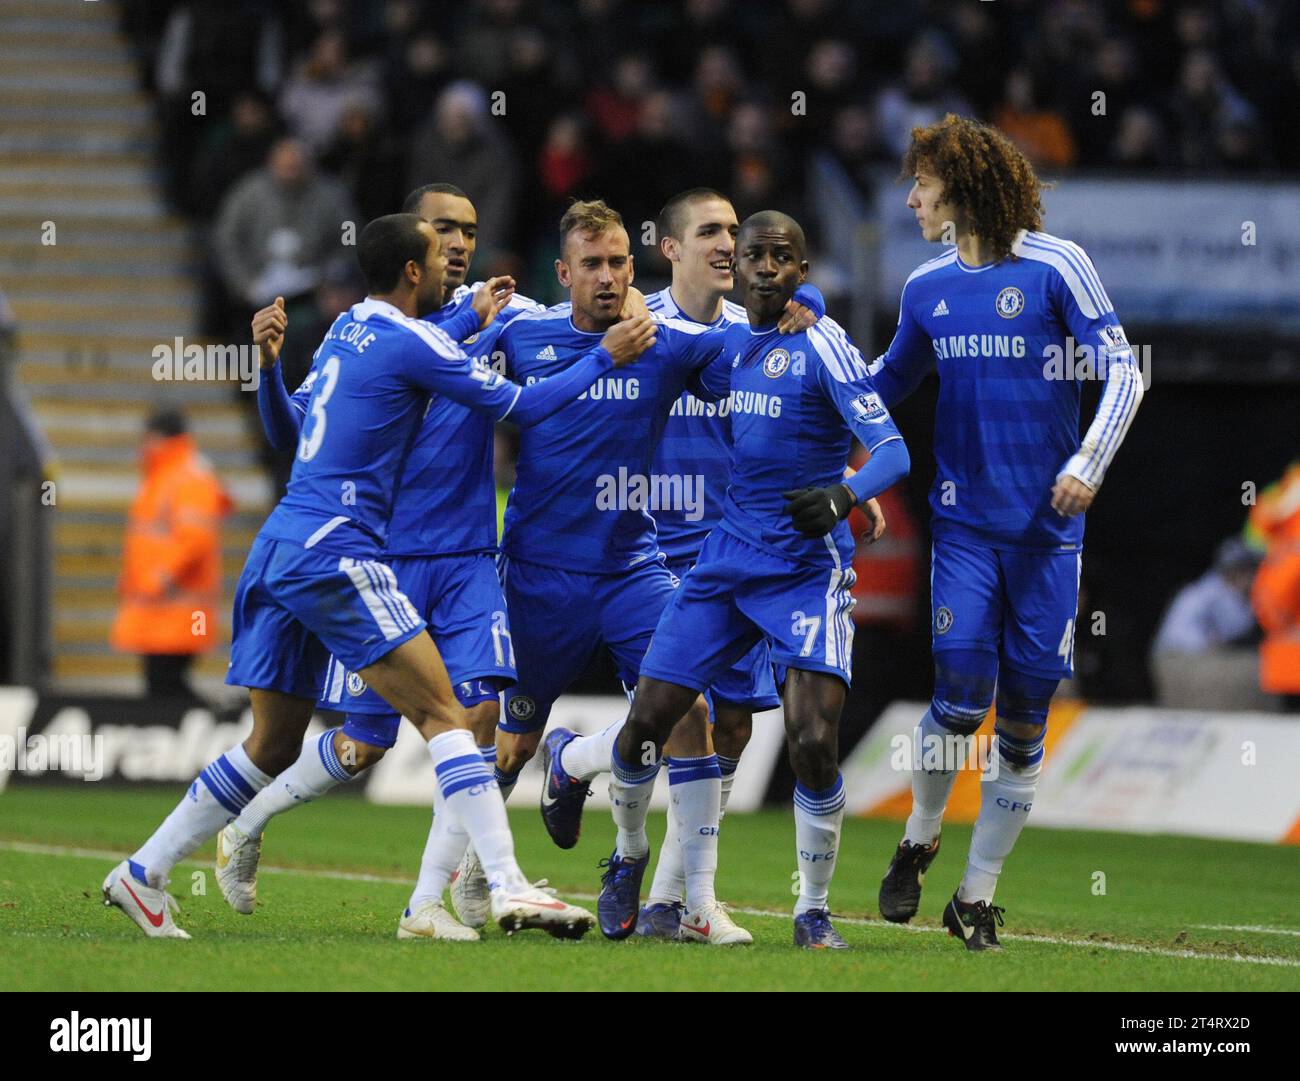 Chelsea players celebrate Ashley Cole, José Bosingwa, Raul Meireles, Oriol Romeu, Ramires and David Luiz. Chelsea - Wolverhampton Wanderers v Chelsea 02/01/2012 Stock Photo